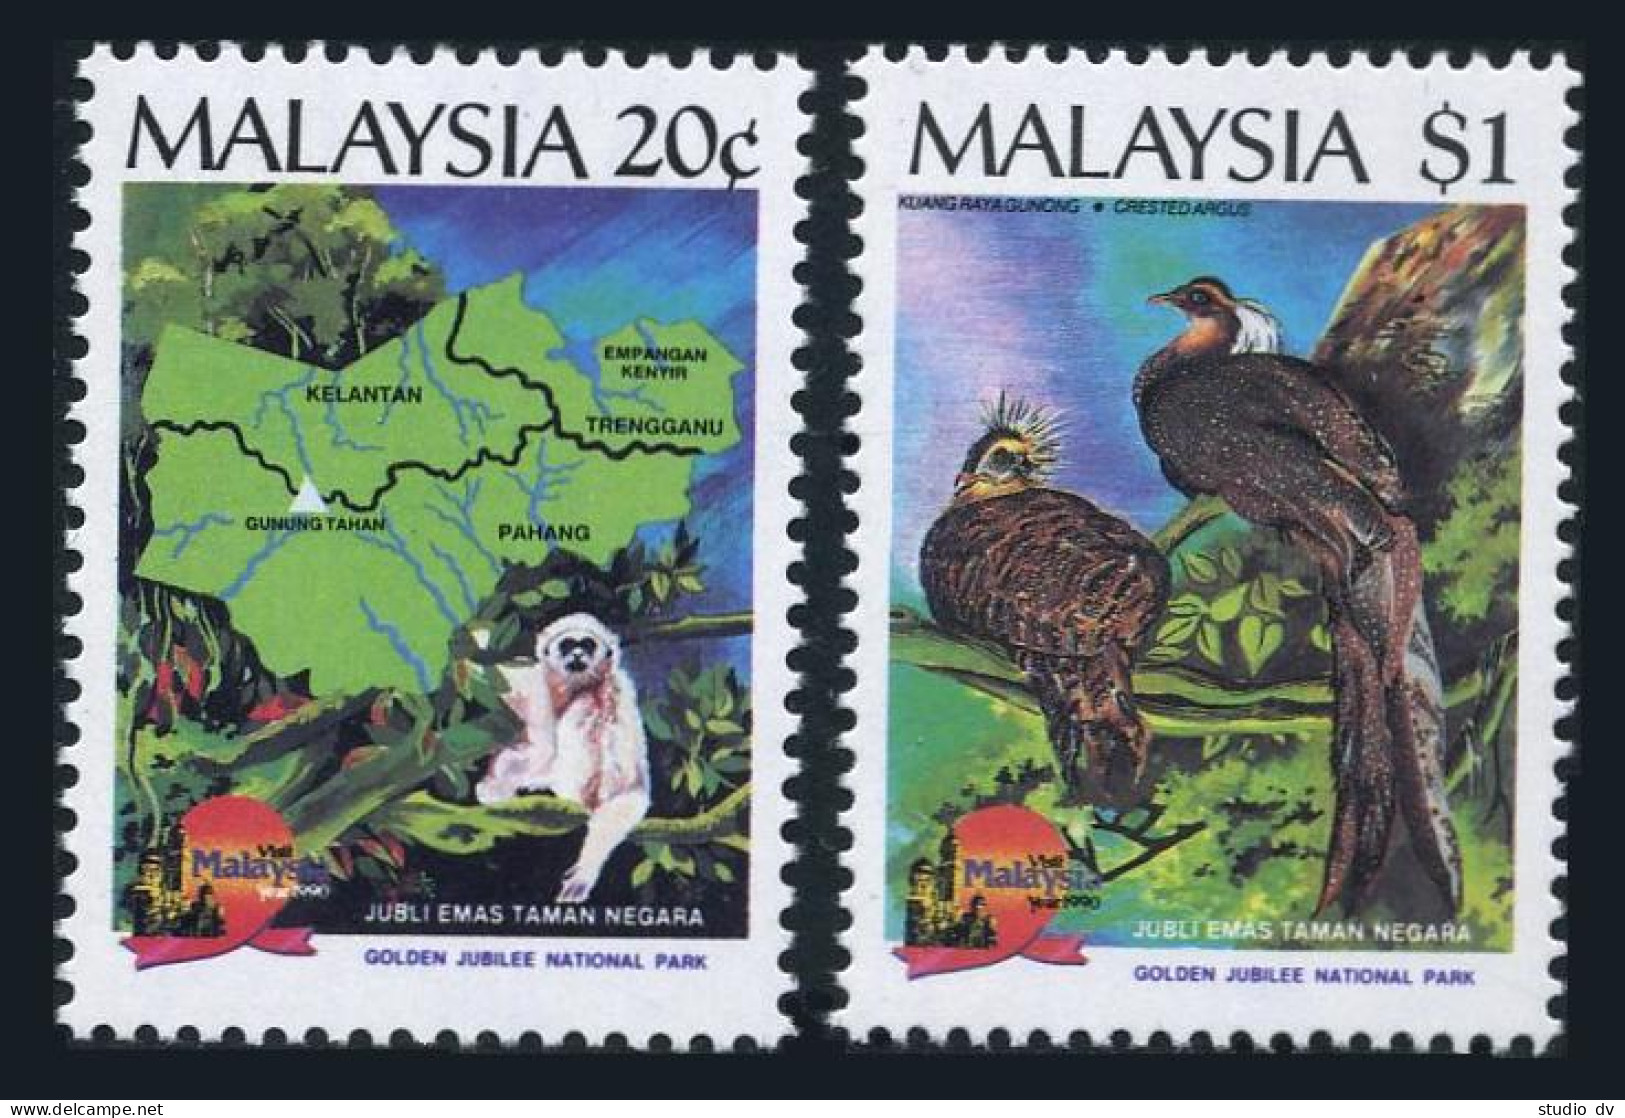 Malaysia 411-412,MNH.Michel 416-417. National Park-50.Sloth,Bird,Map.1989.  - Malasia (1964-...)